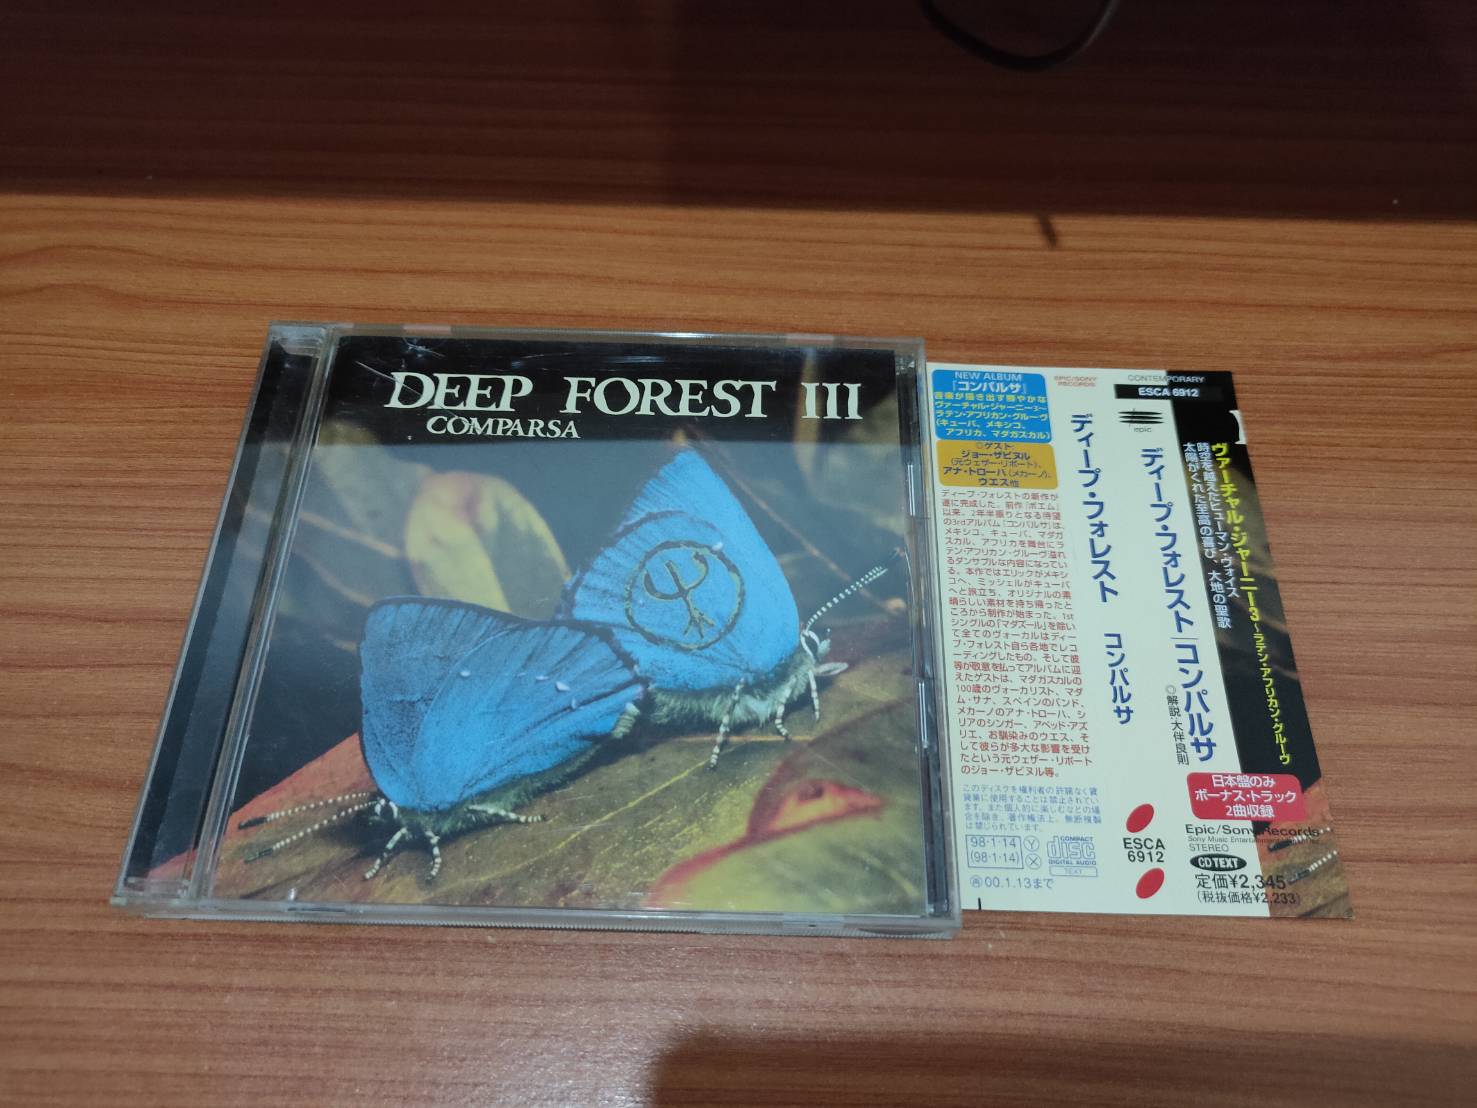 CD.MUSIC ซีดีเพลง เพลงสากล DEEP FOREST  III COMPARSA